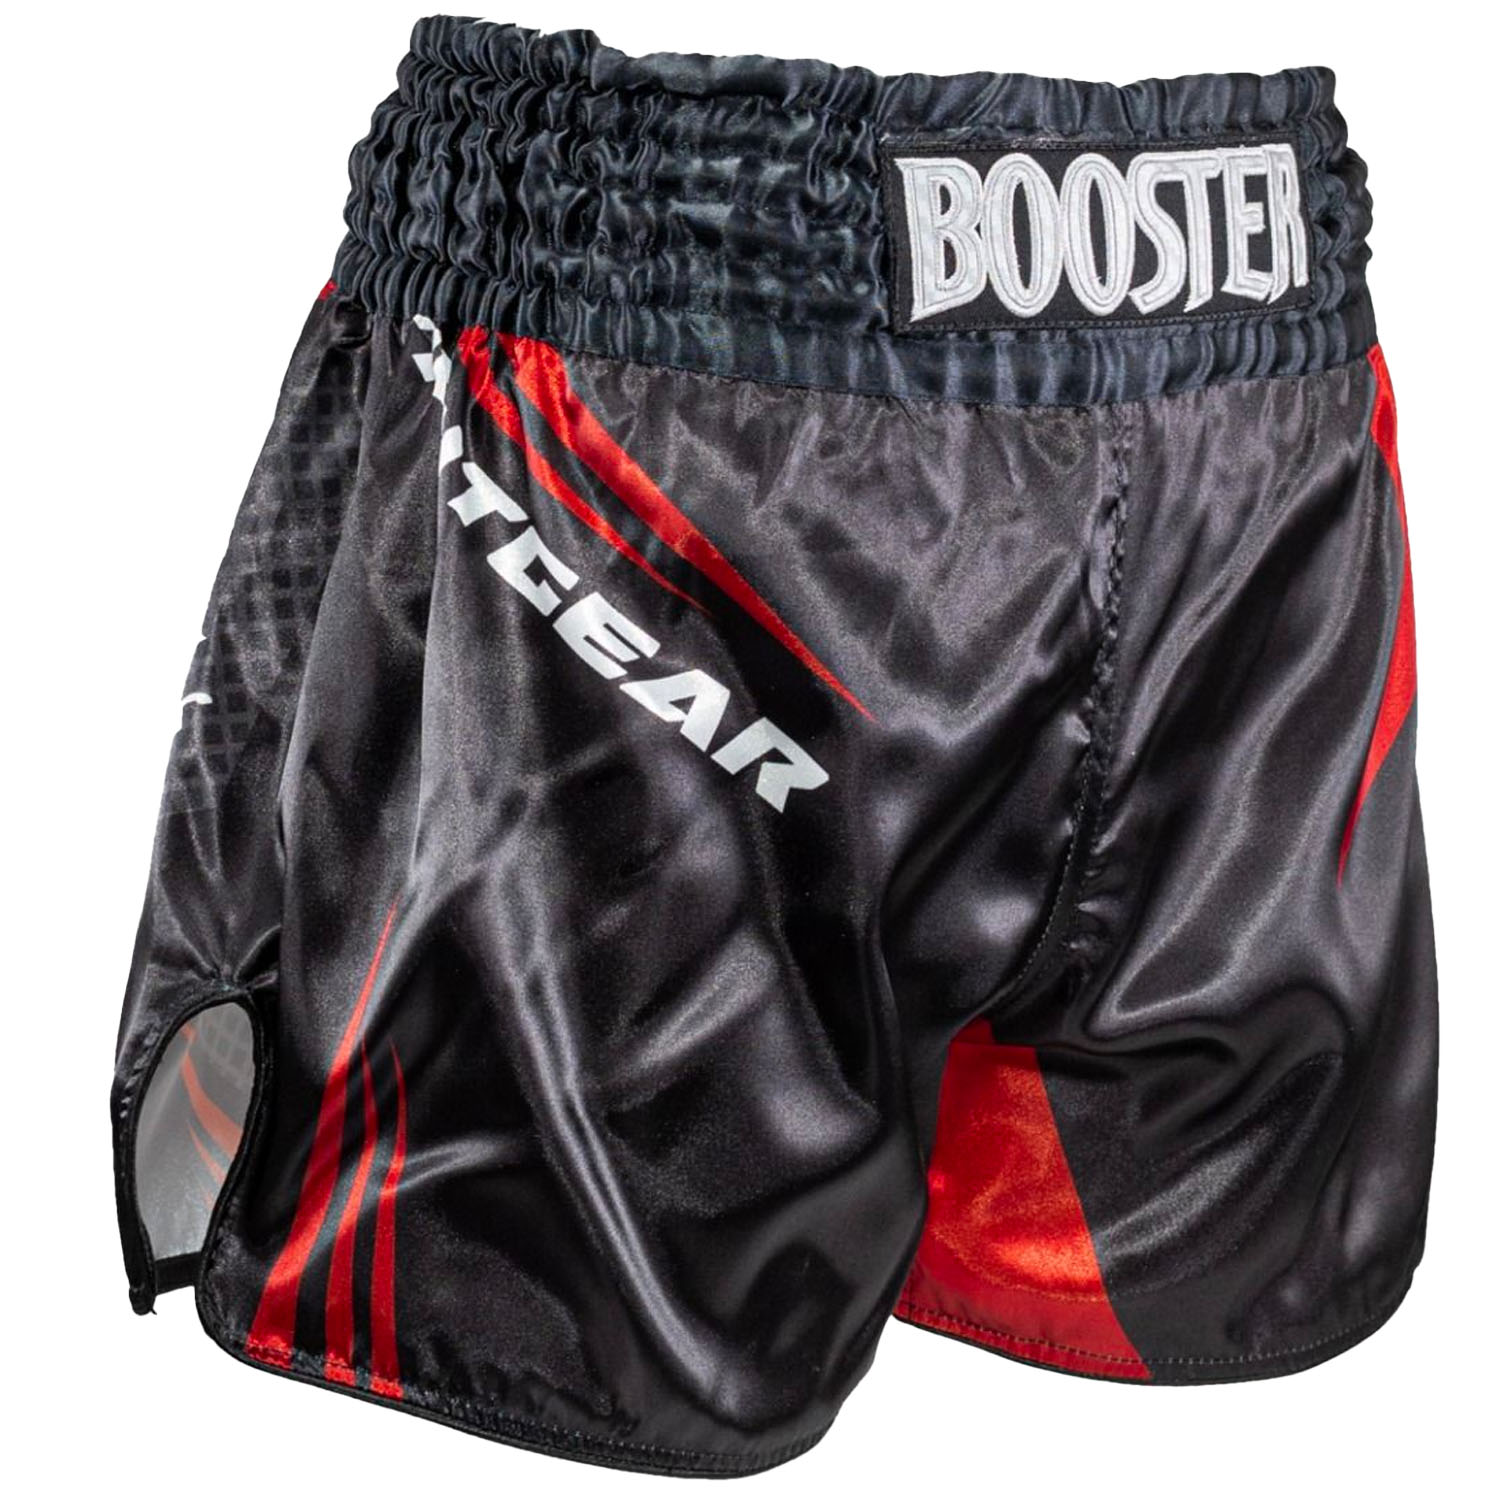 Booster Muay Thai Shorts, AD Xplosion 2, schwarz-rot